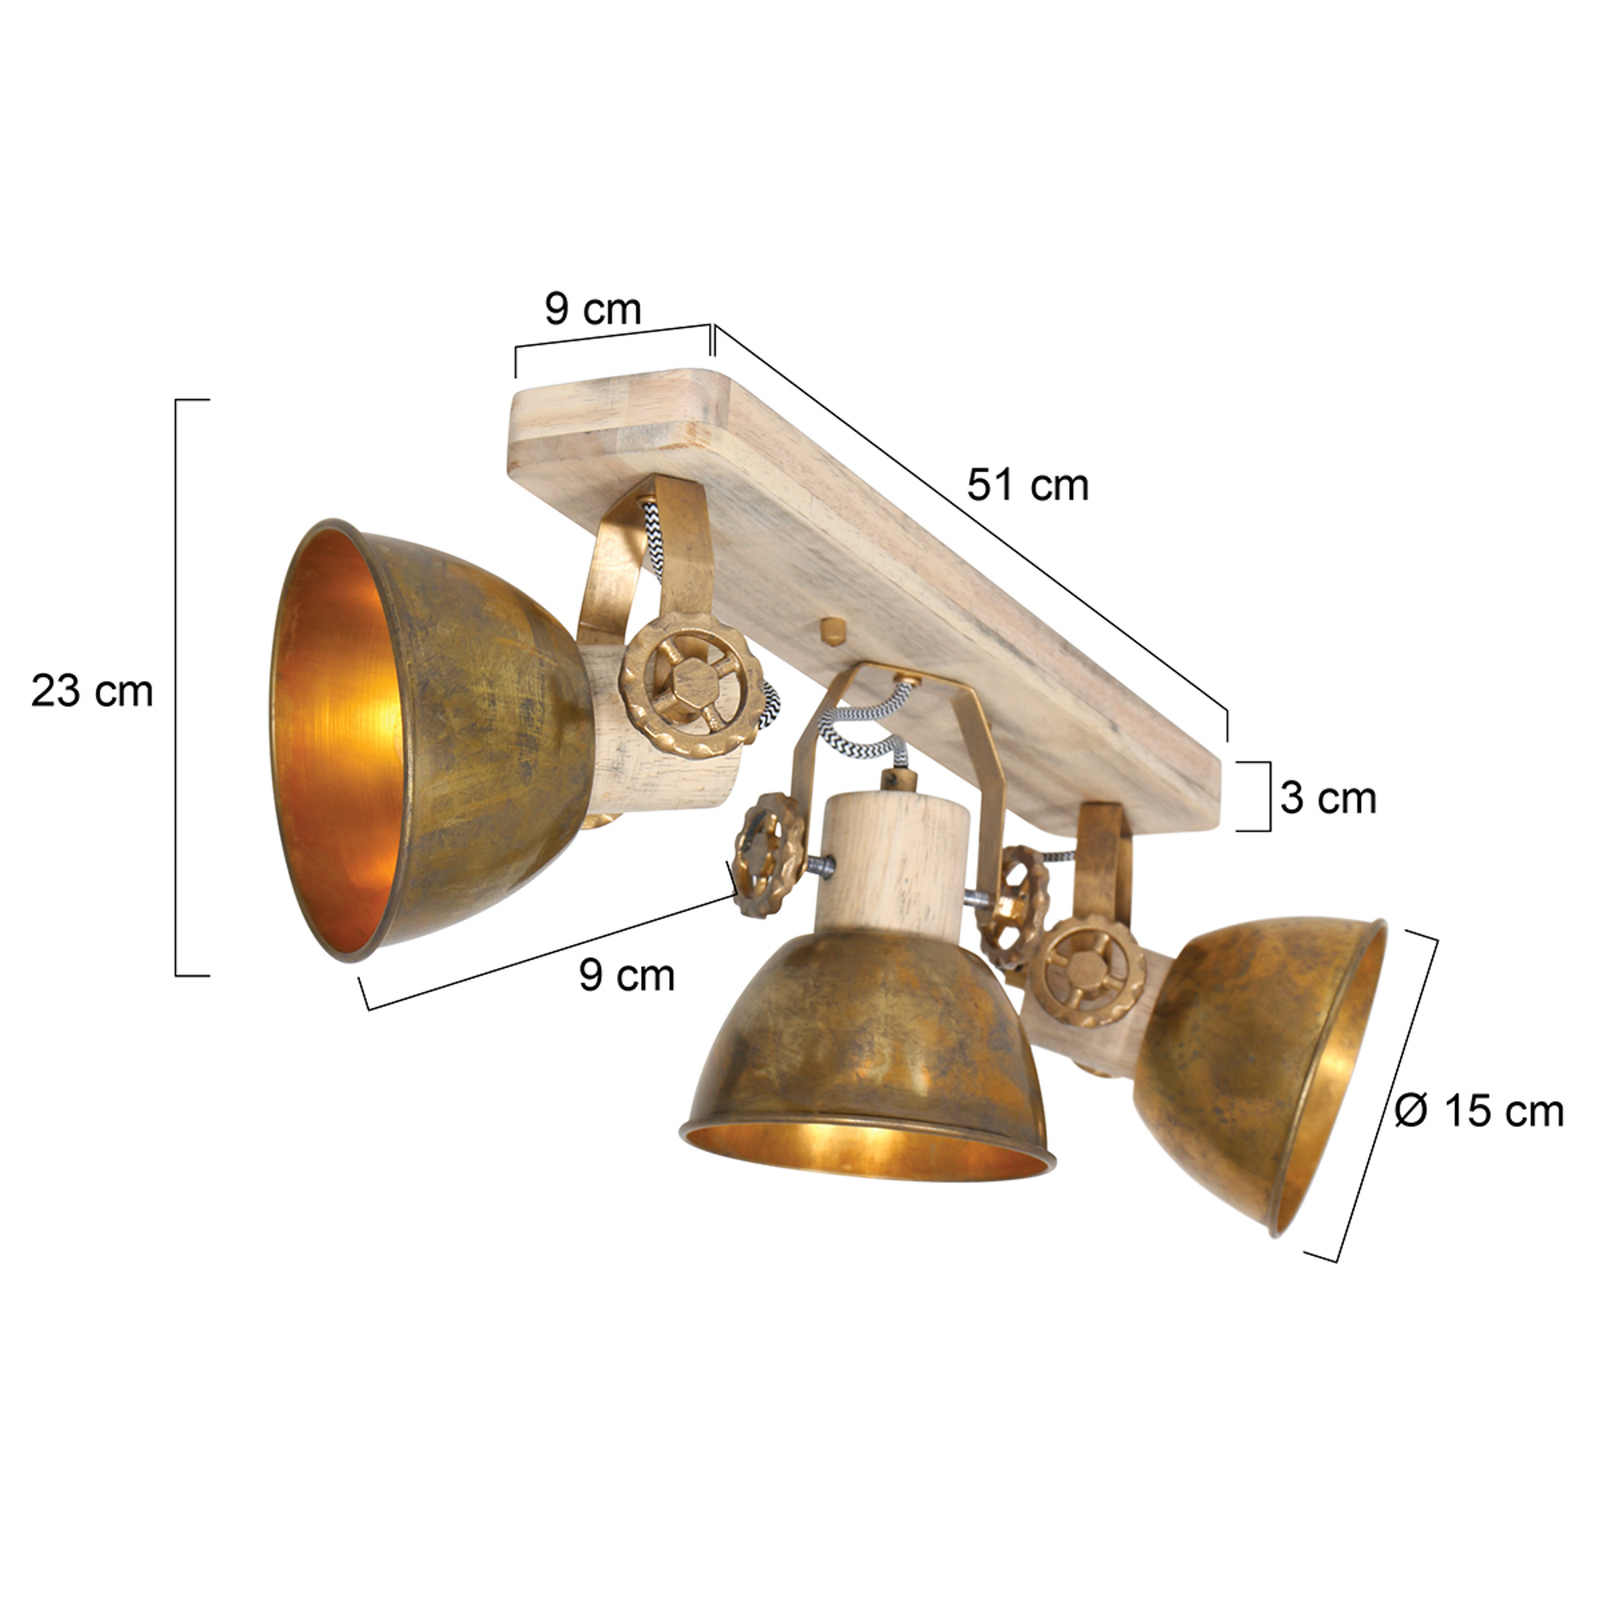 Gearwood downlight, 3-bulb, bronze